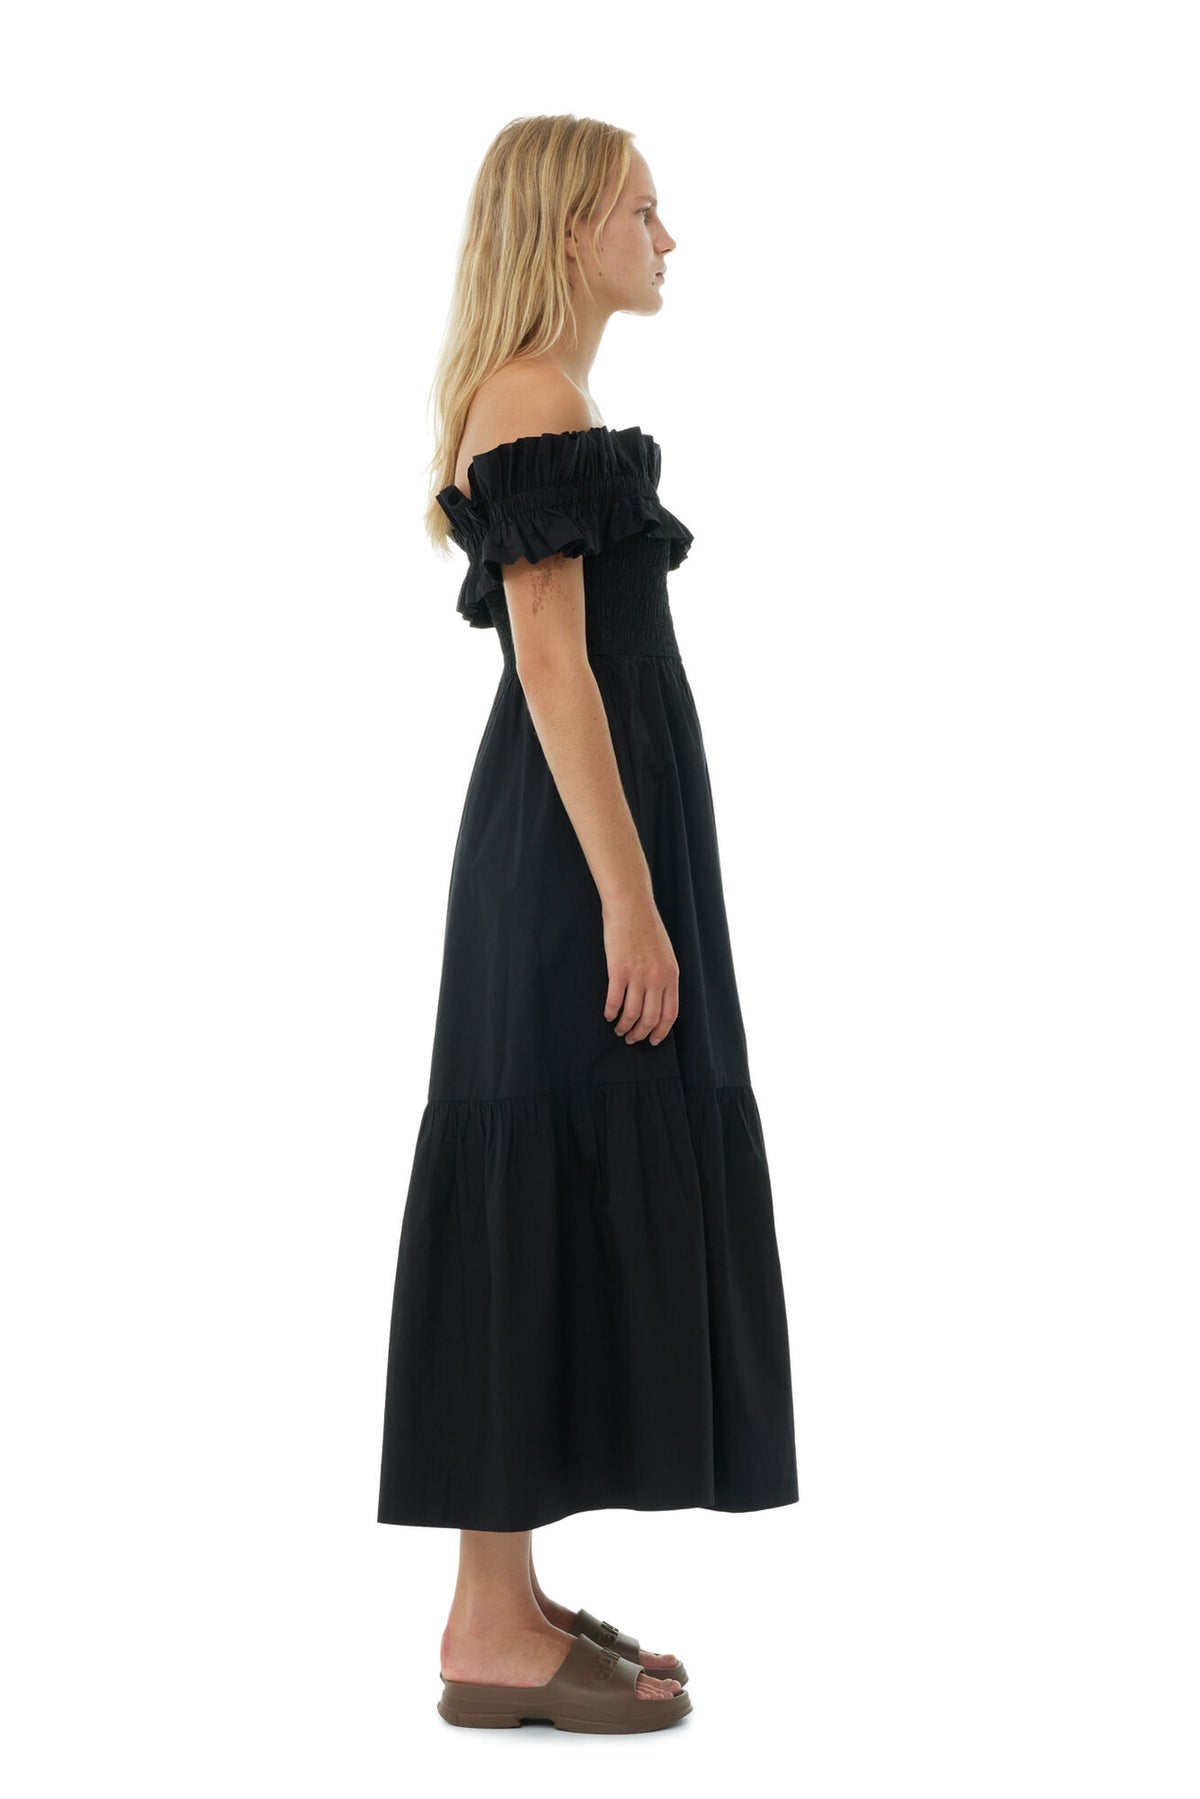 GANNI F9168 Cotton Poplin Smock Dress in Black